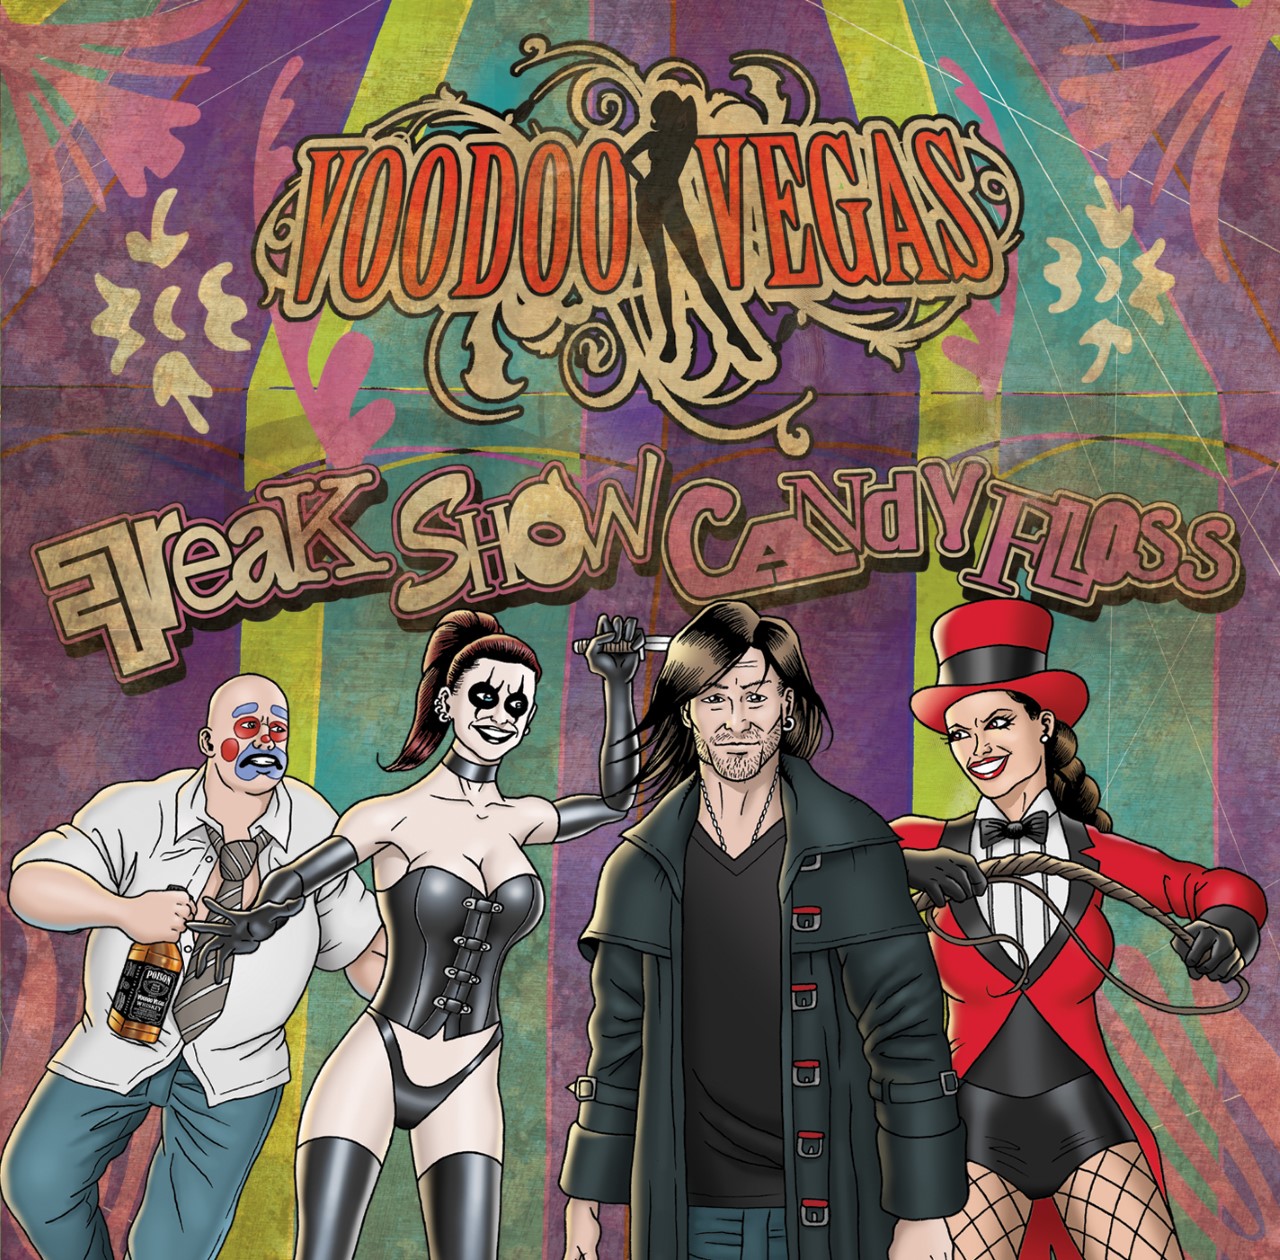 Voodoo Vegas (GB) – Freak Show Candy Floss